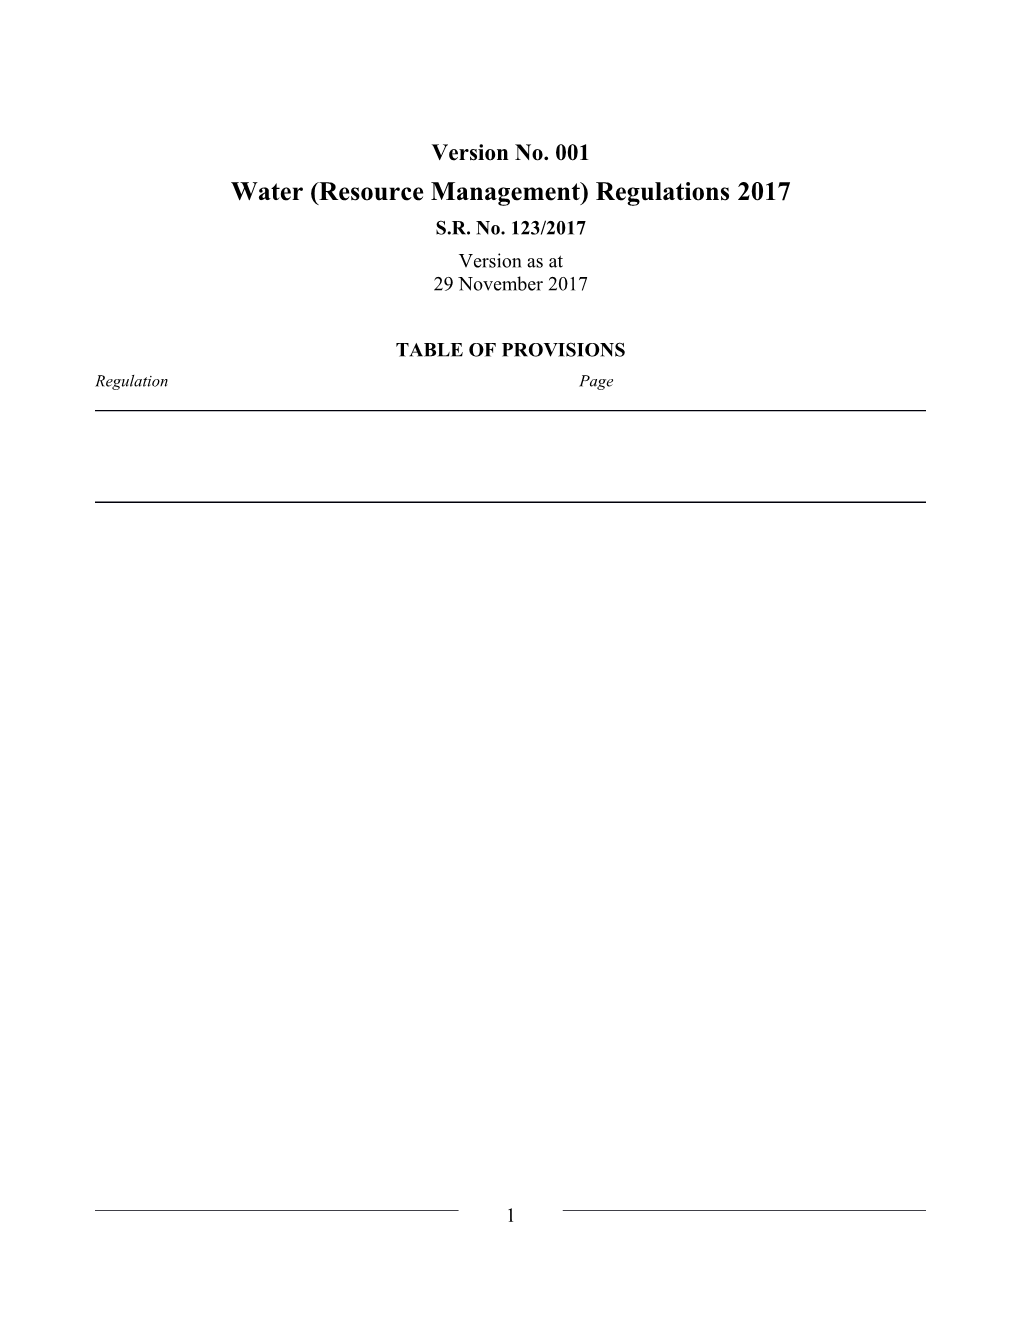 Water (Resource Management) Regulations 2017